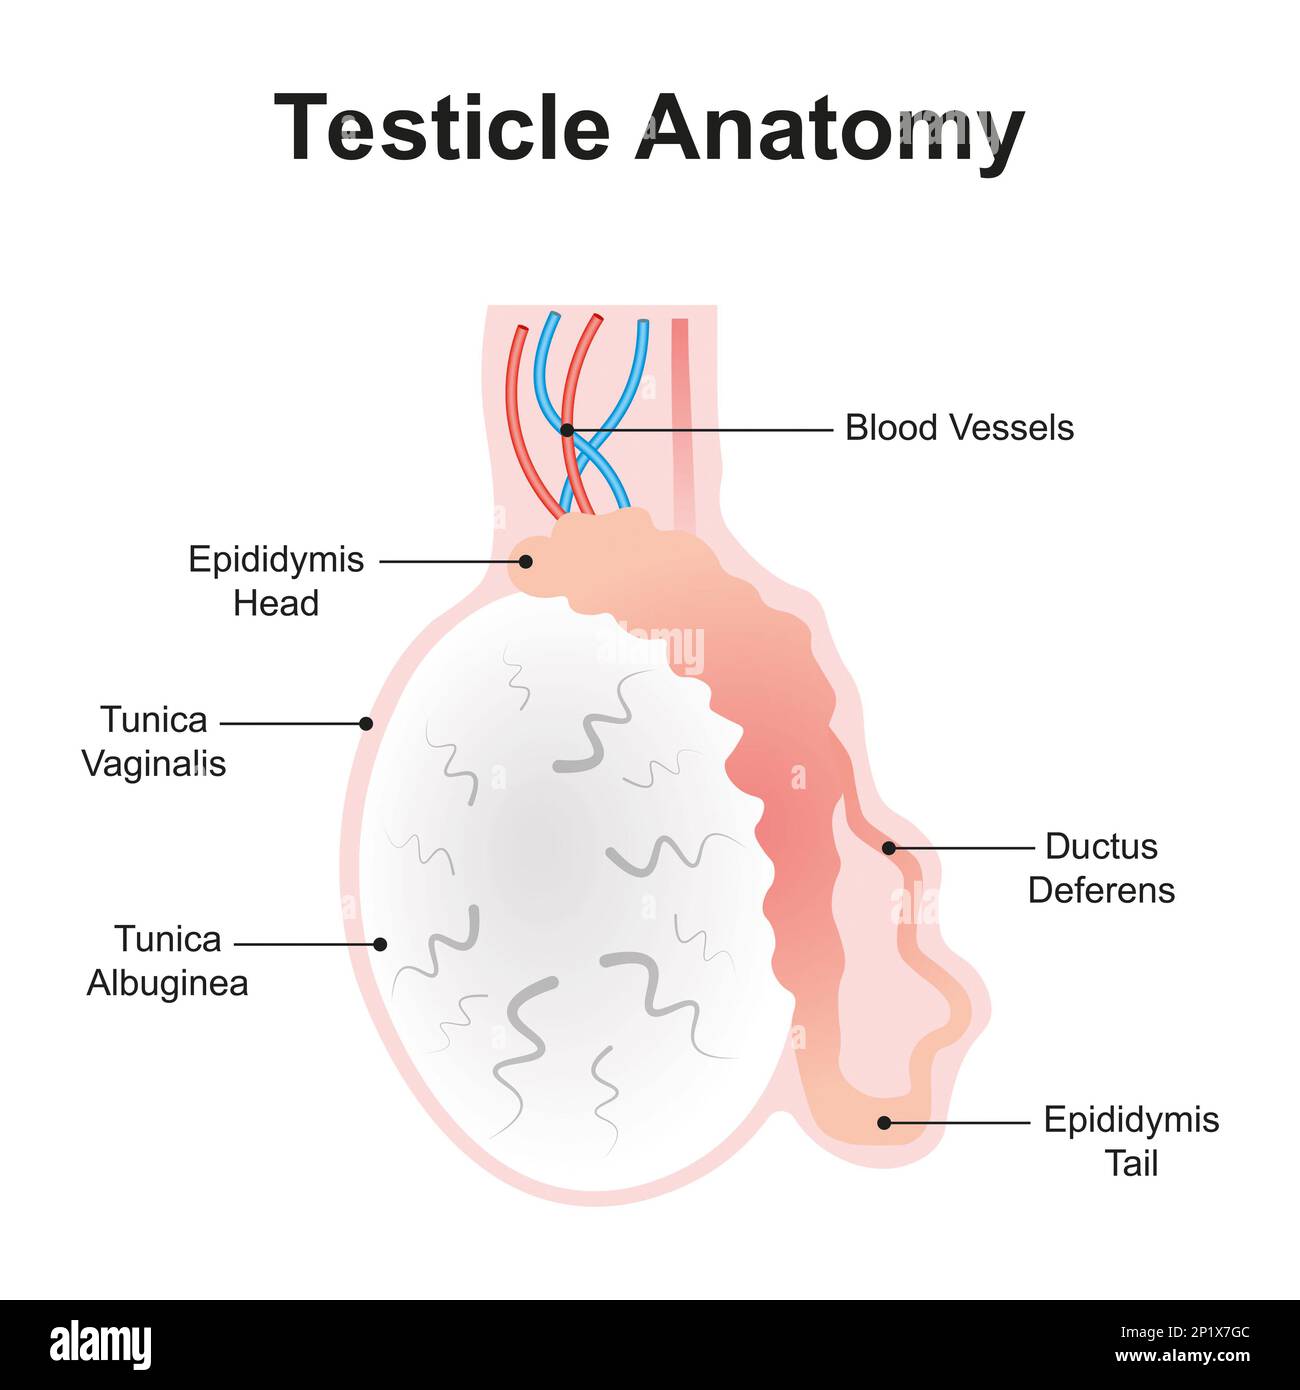 Testicle anatomy, illustration Stock Photo